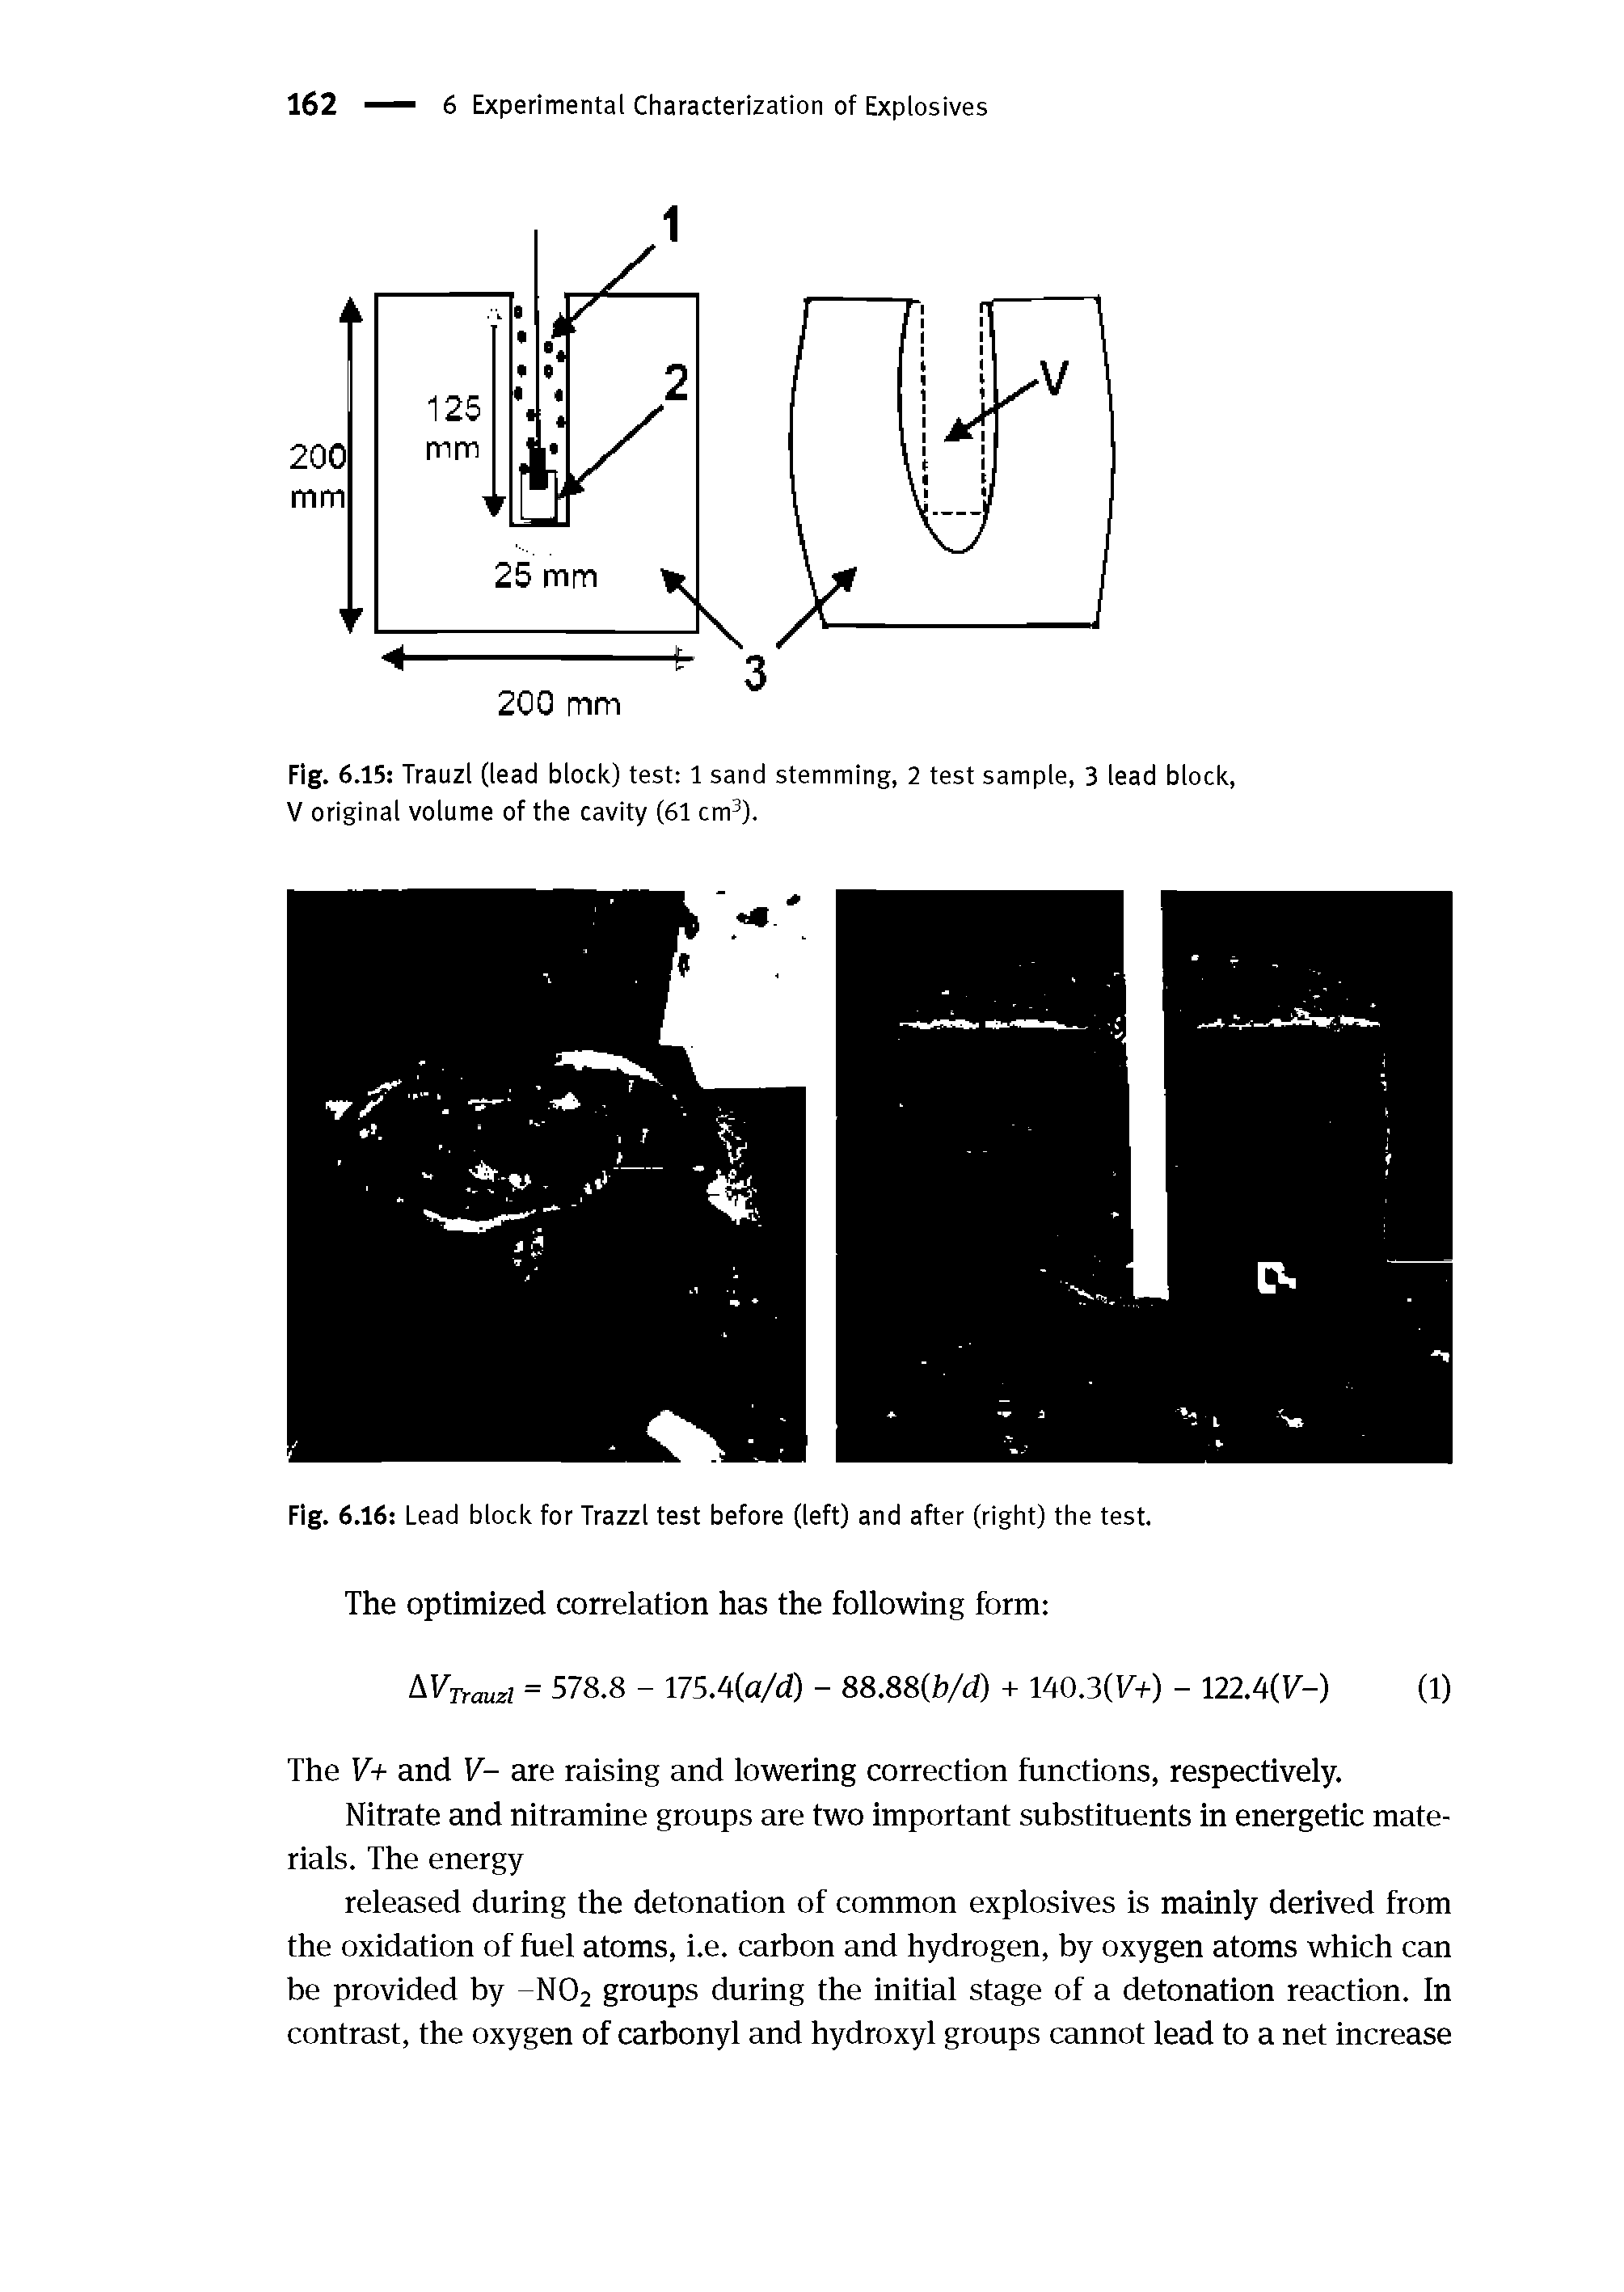 Fig. 6.15 Trauzl (lead block) test 1 sand stemming, 2 test sample, 3 lead block, V original volume of the cavity (61 cm3).